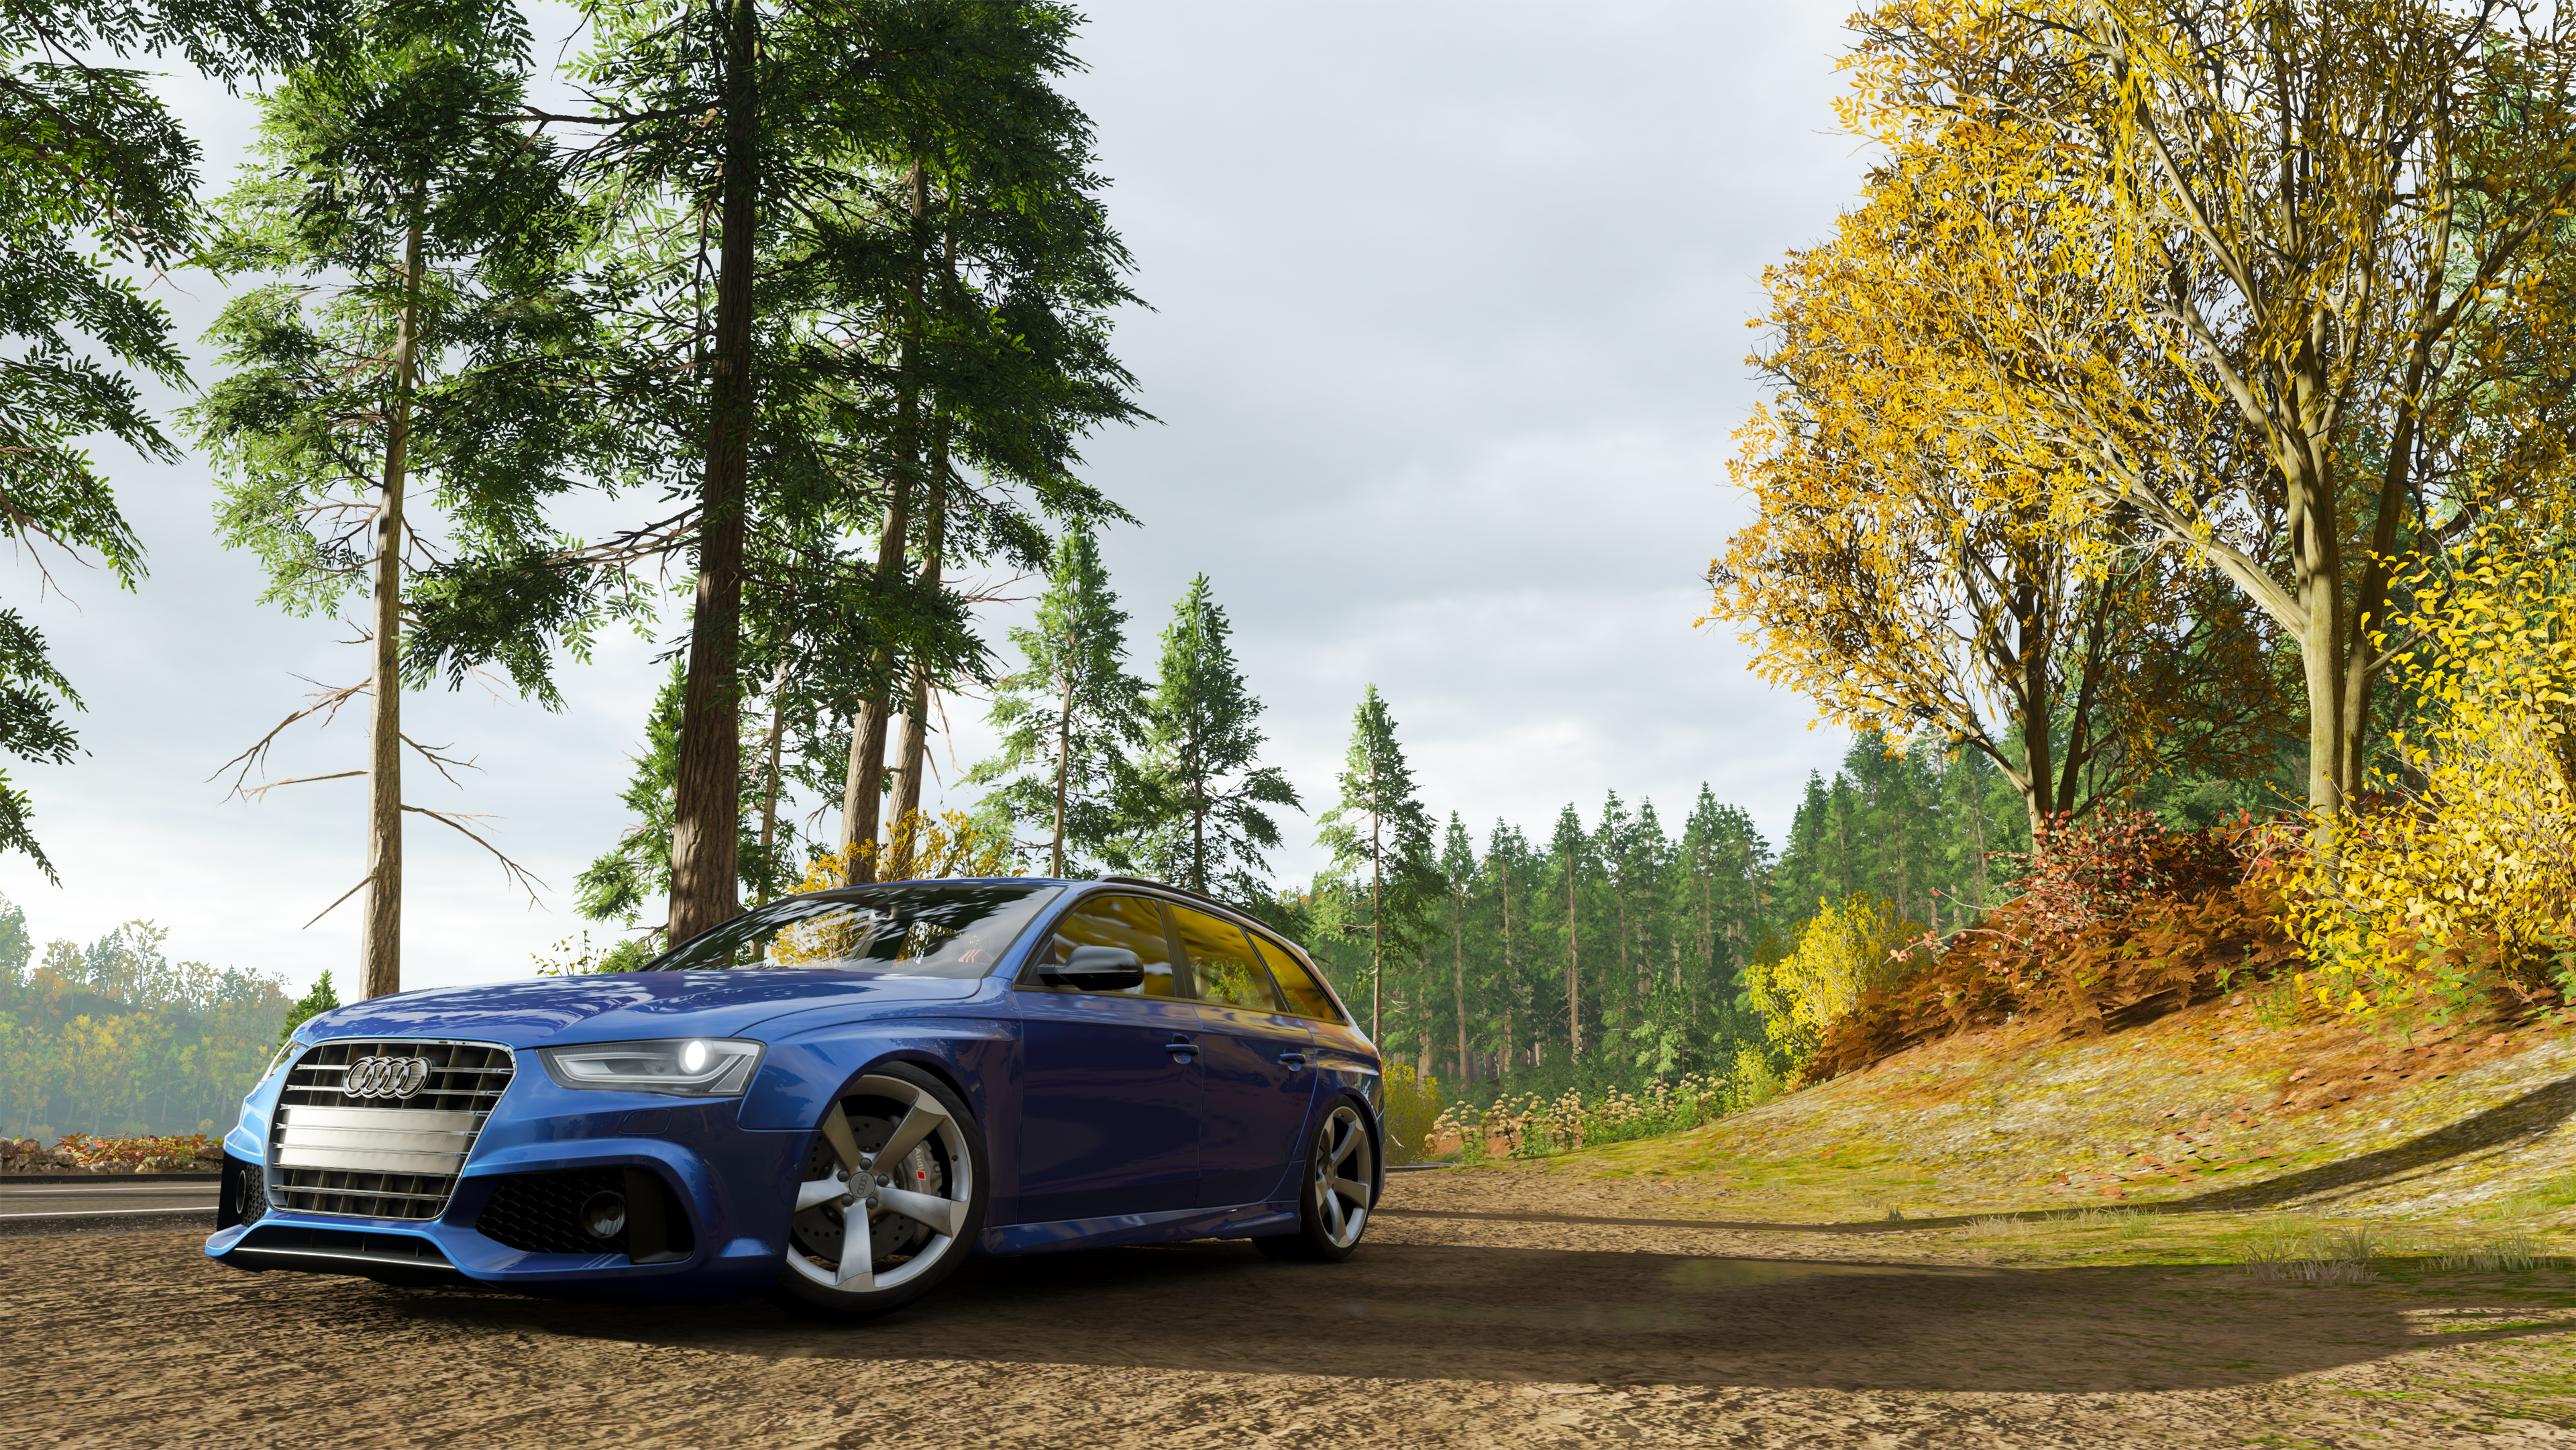 General 3840x2161 Forza Horizon 4 fall video games screen shot Audi RS6 Avant car